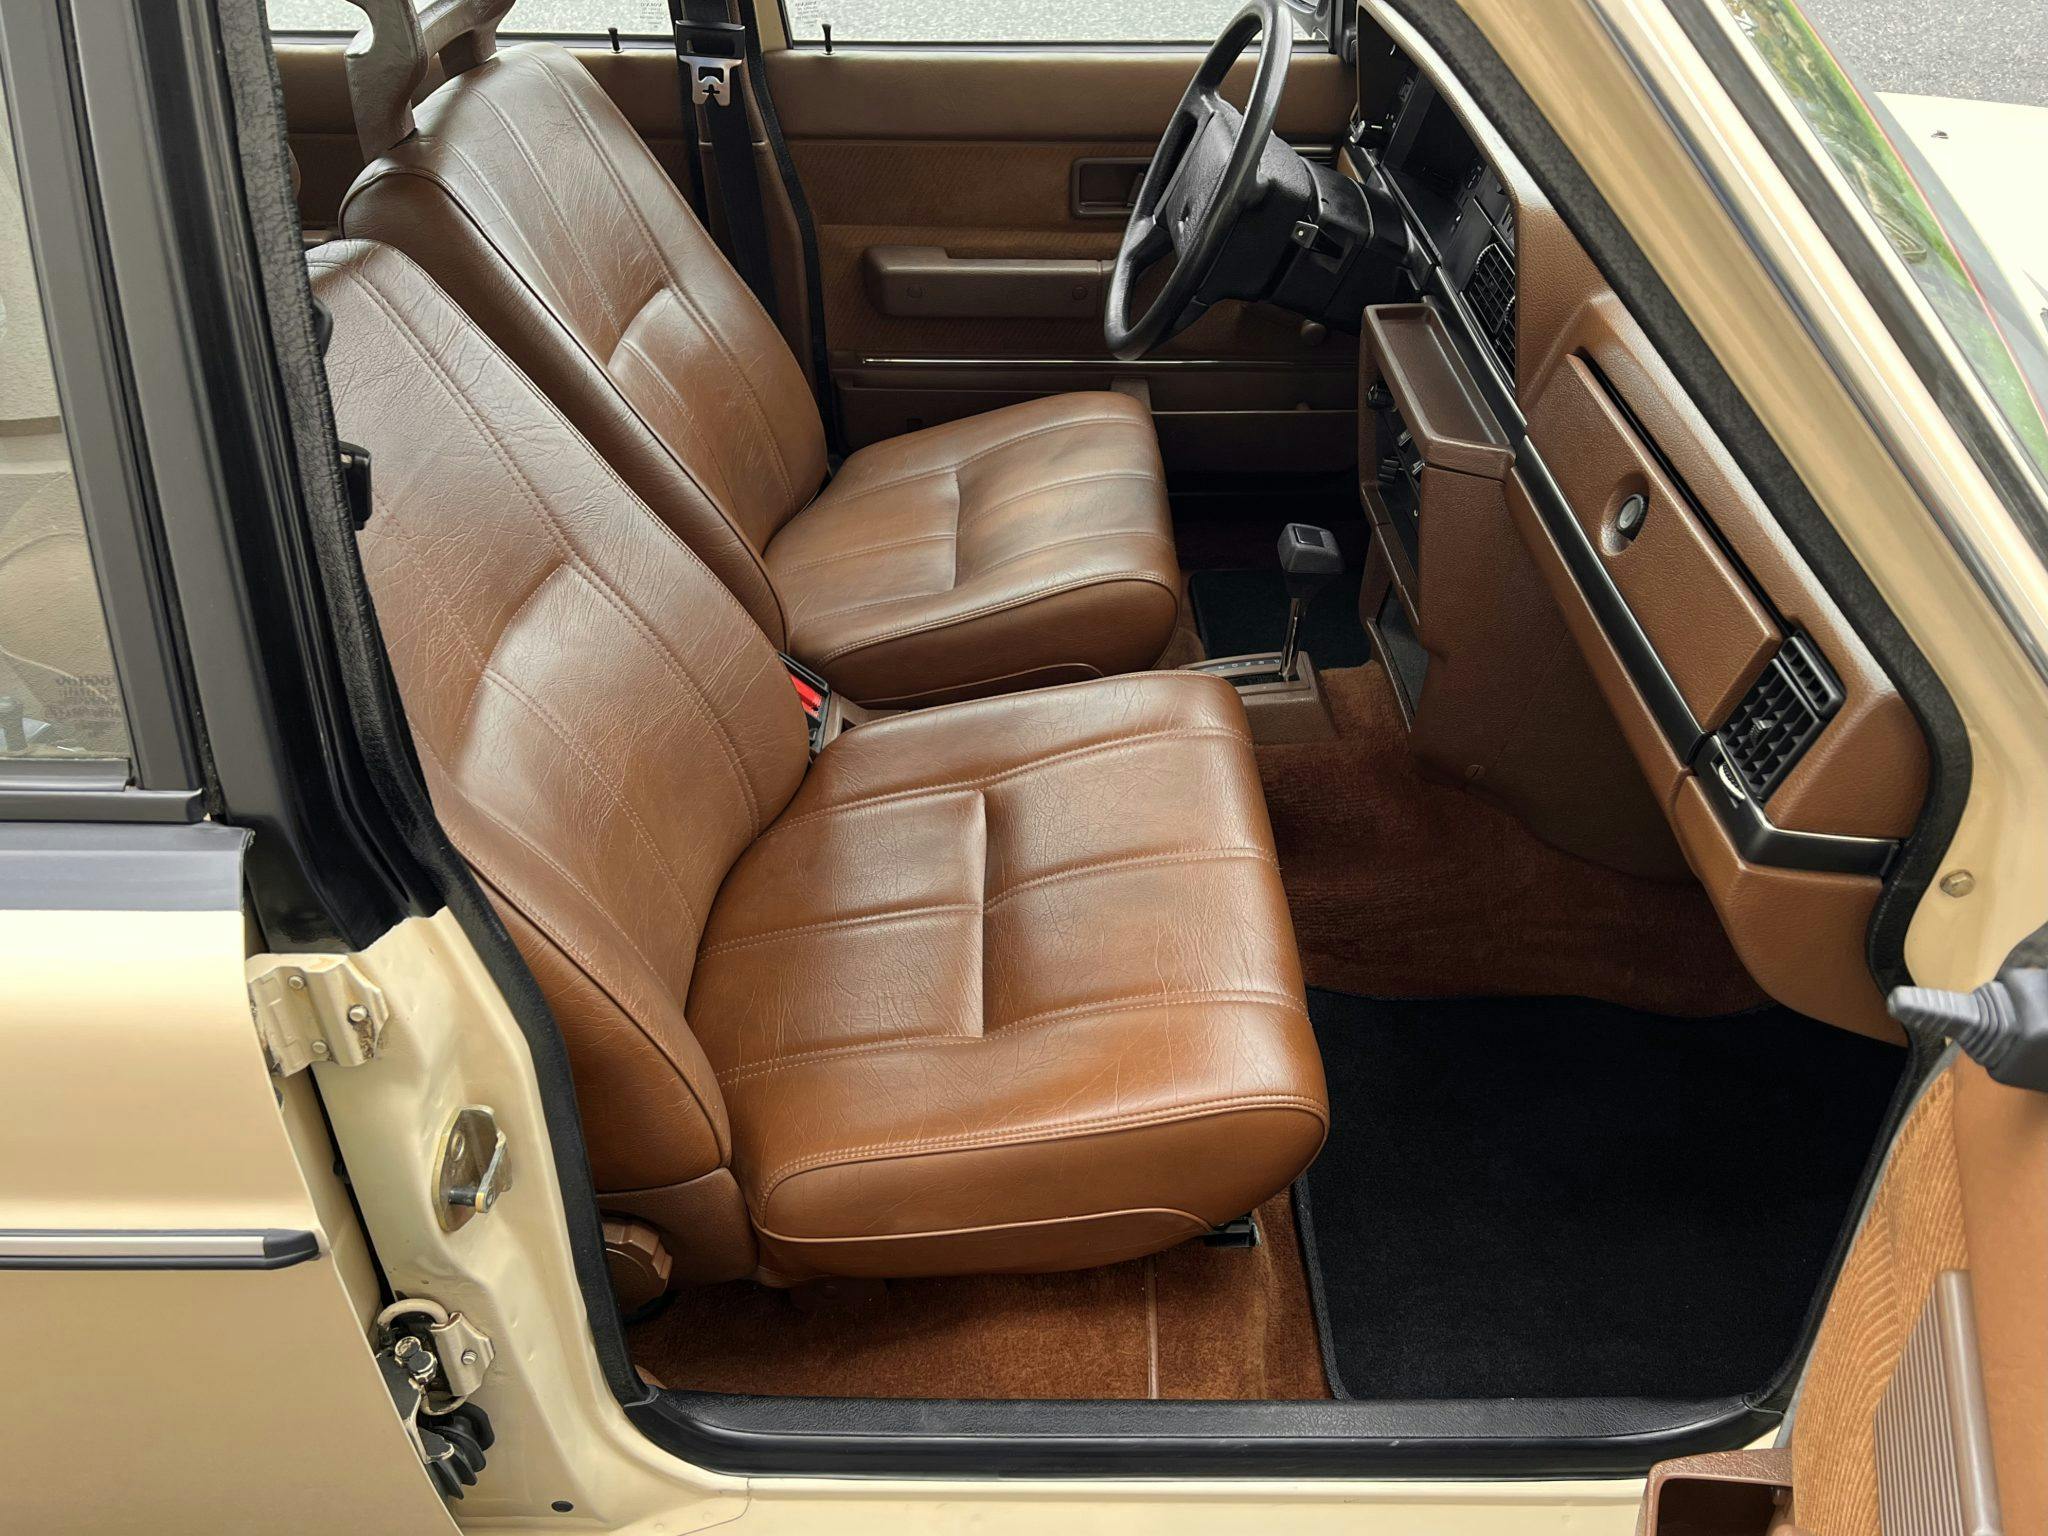 1987 Volvo 240 Wagon DL interior side profile